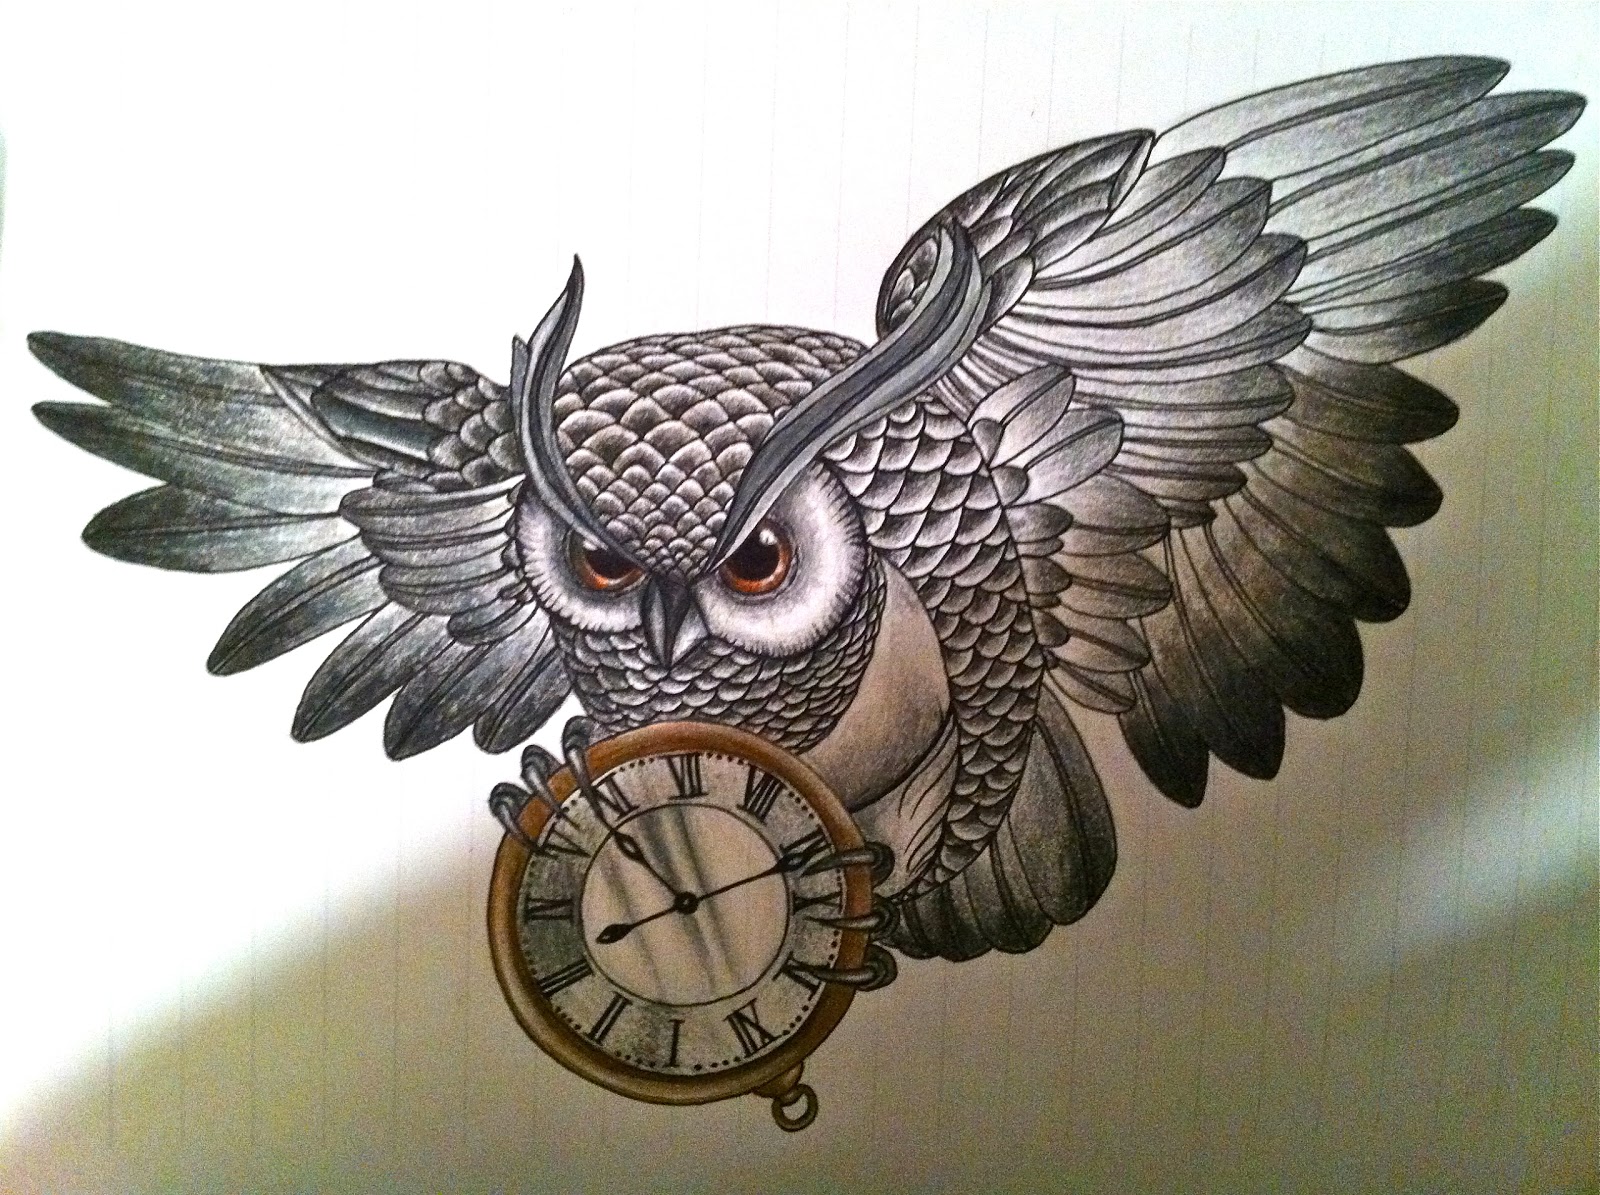 Brown-eyed owl hanging a clock tattoo design